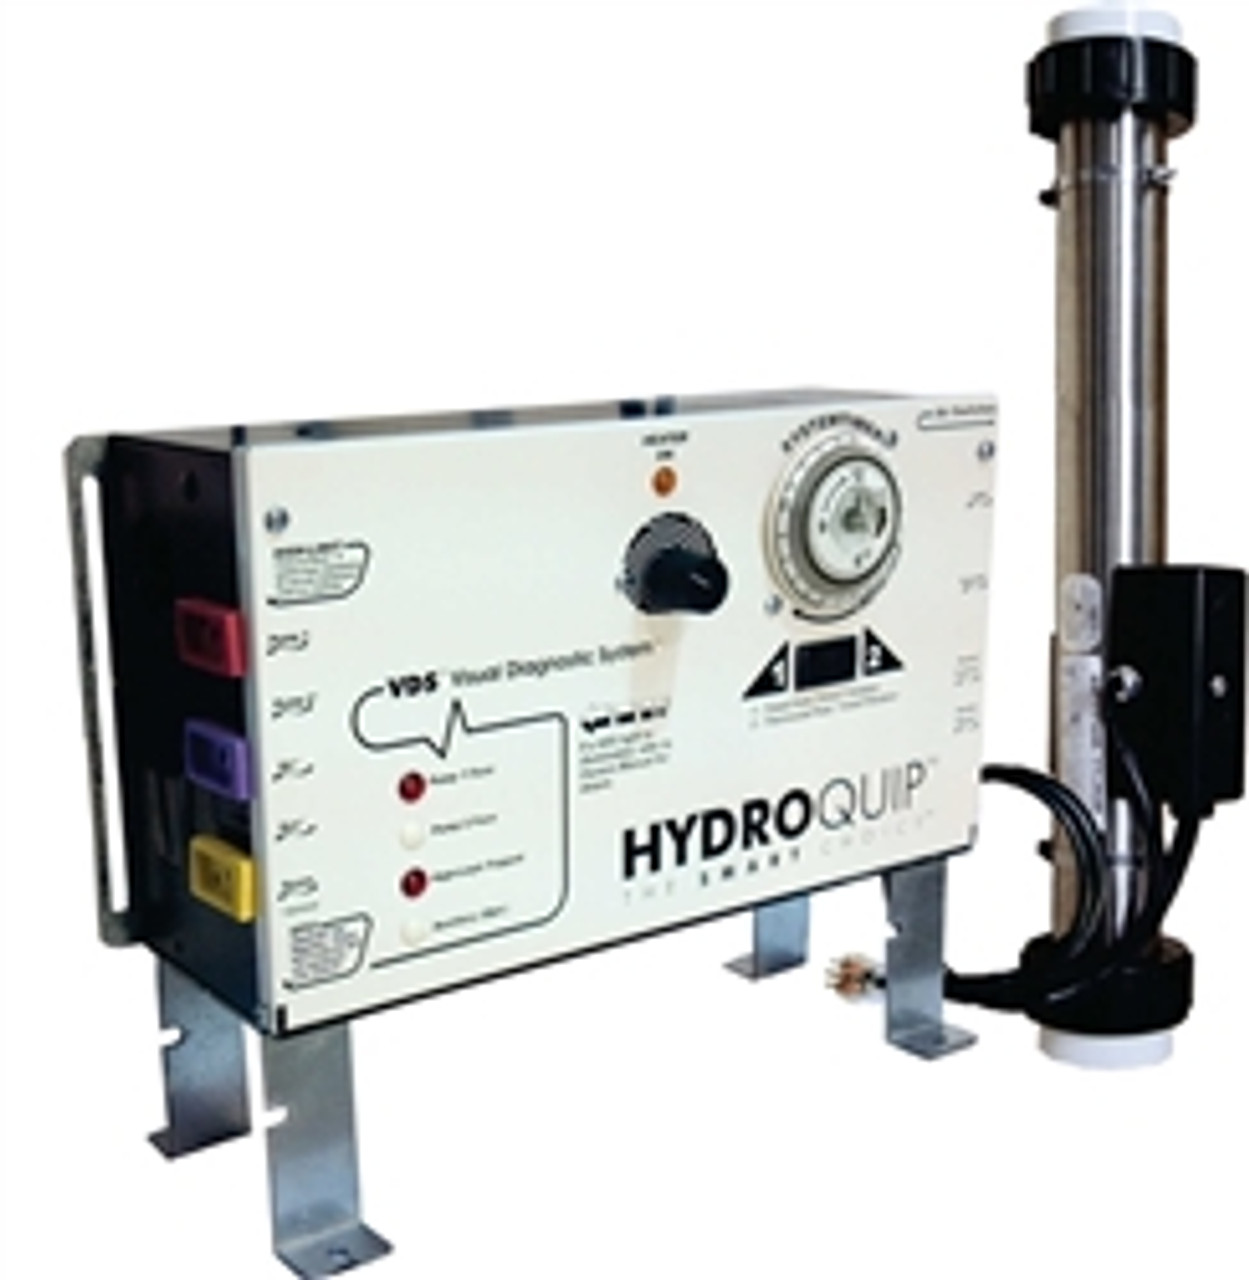 HydroQuip CS6008-U2-VH Retro Fit Control System With Remote Heater, CS6008-U2-VH